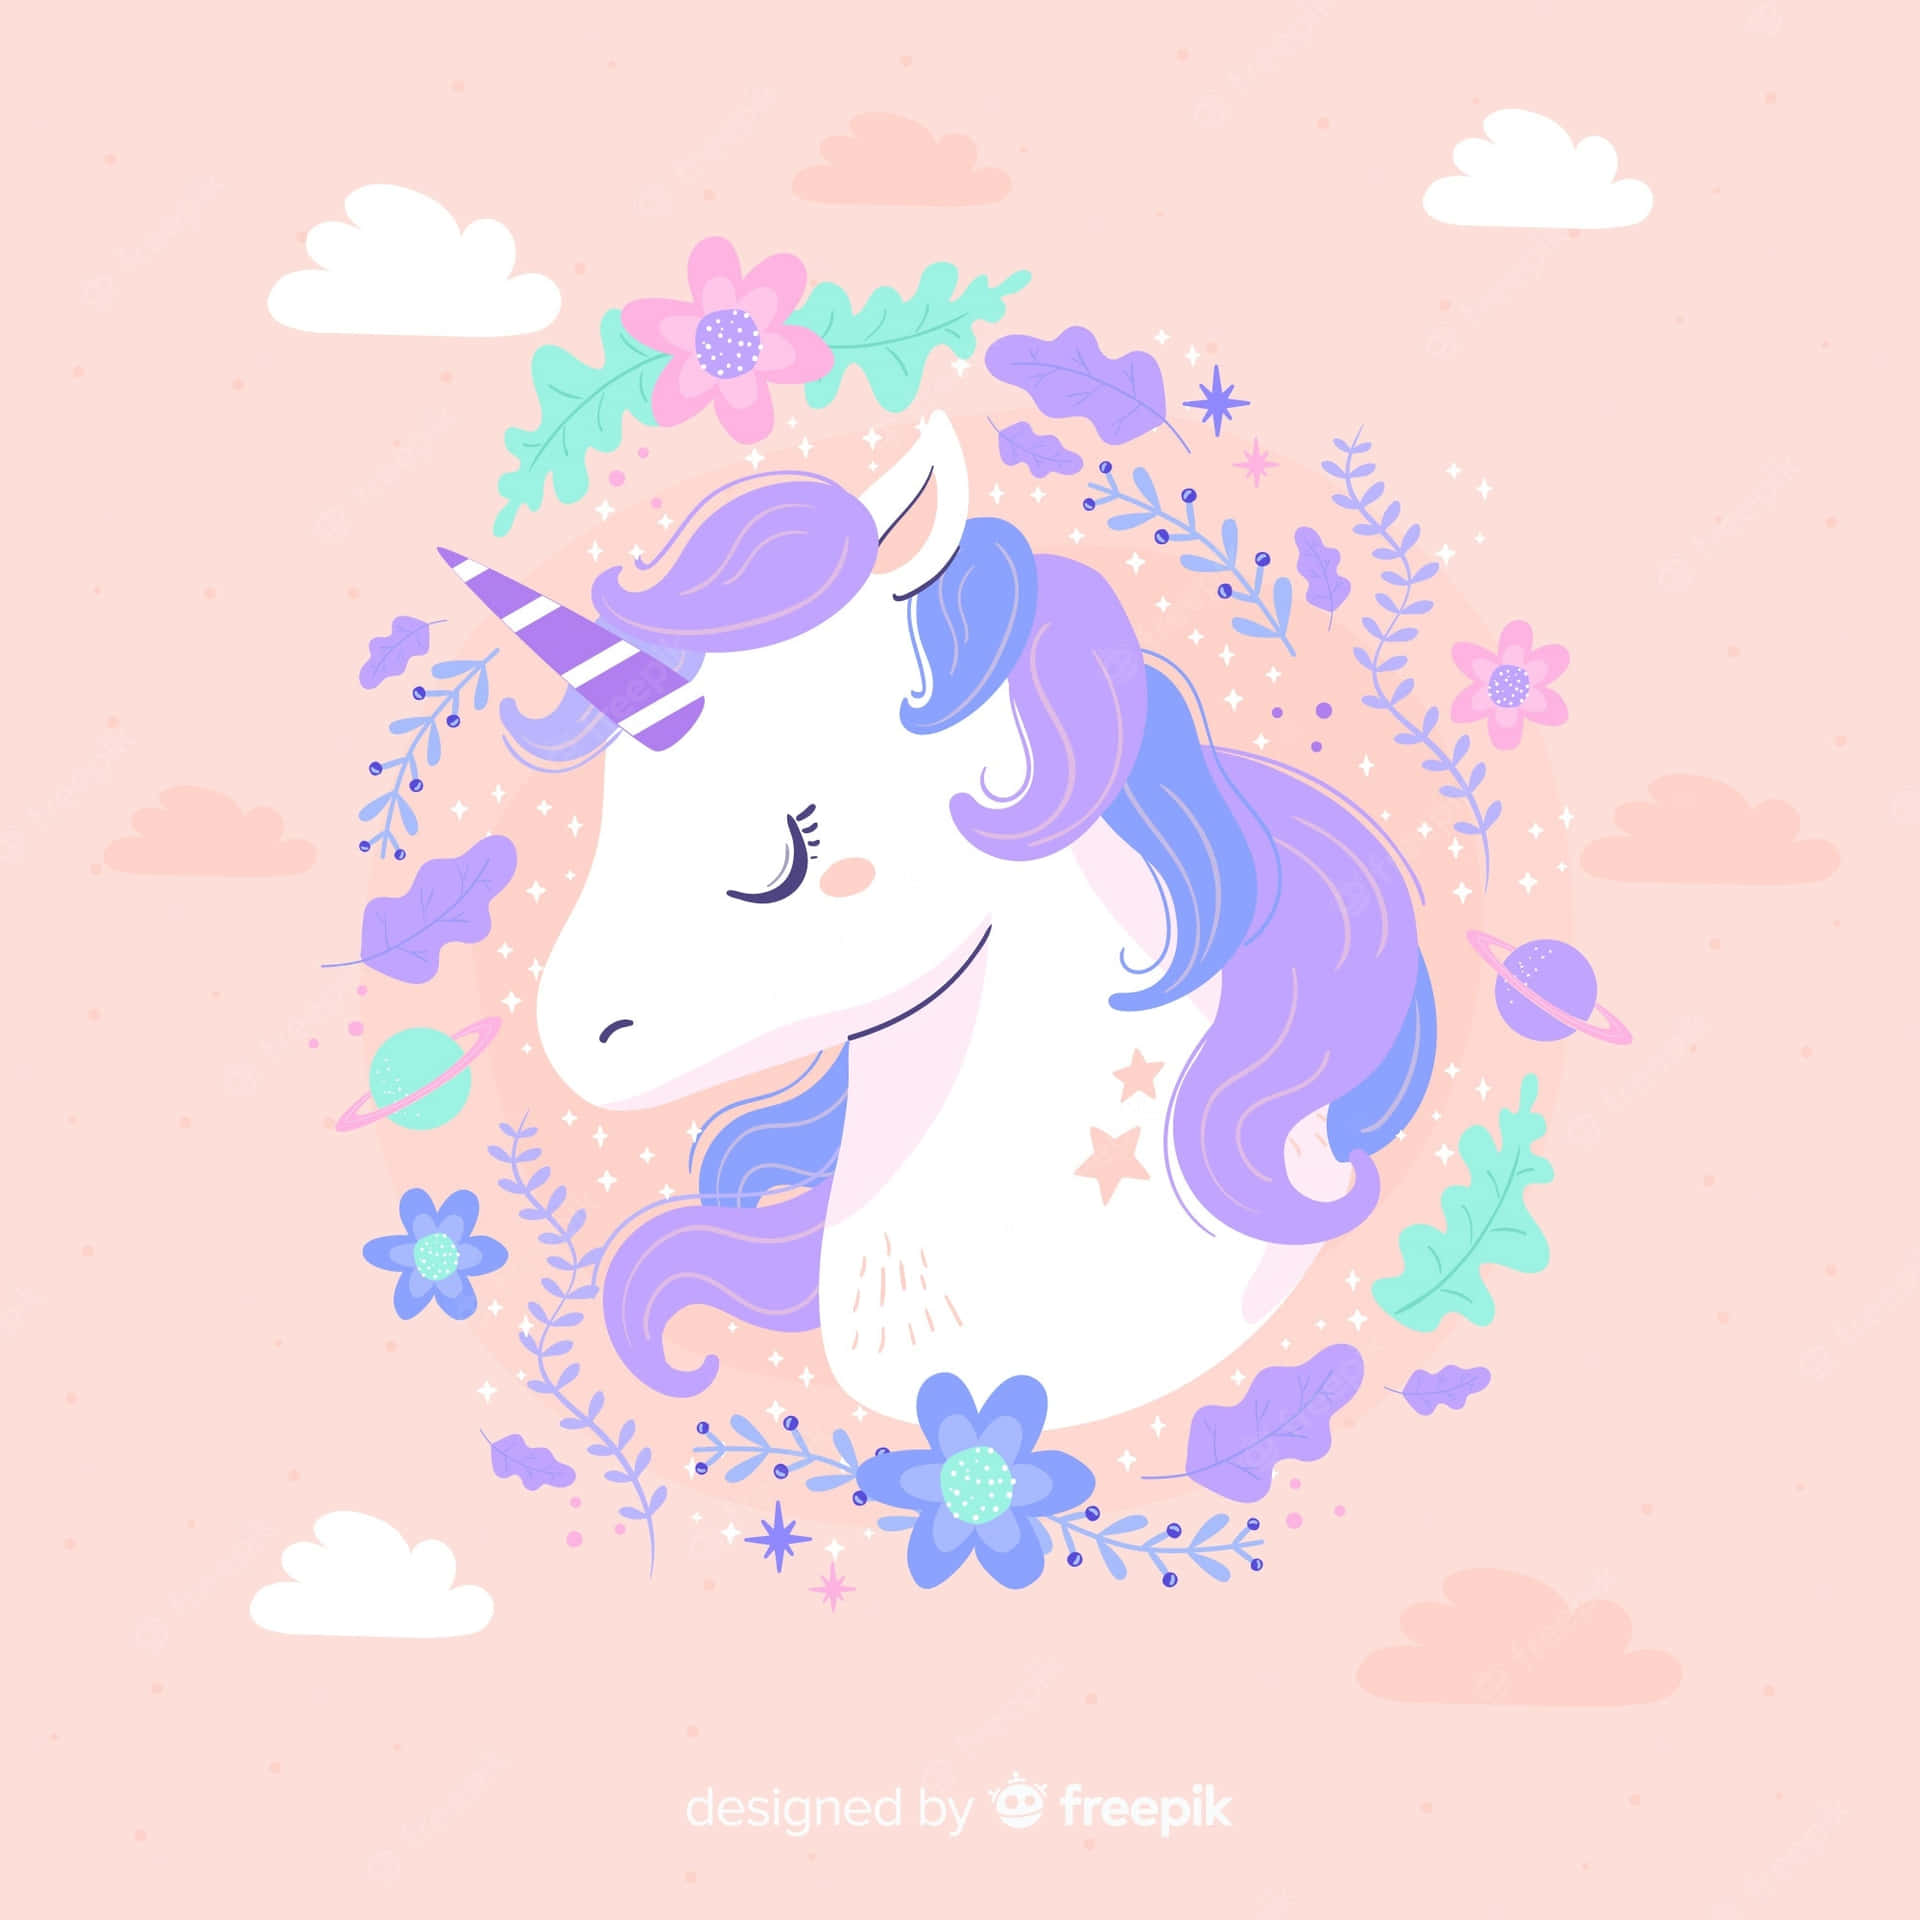 Joyful Pastel Colours Illuminate the Magical Unicorn Wallpaper